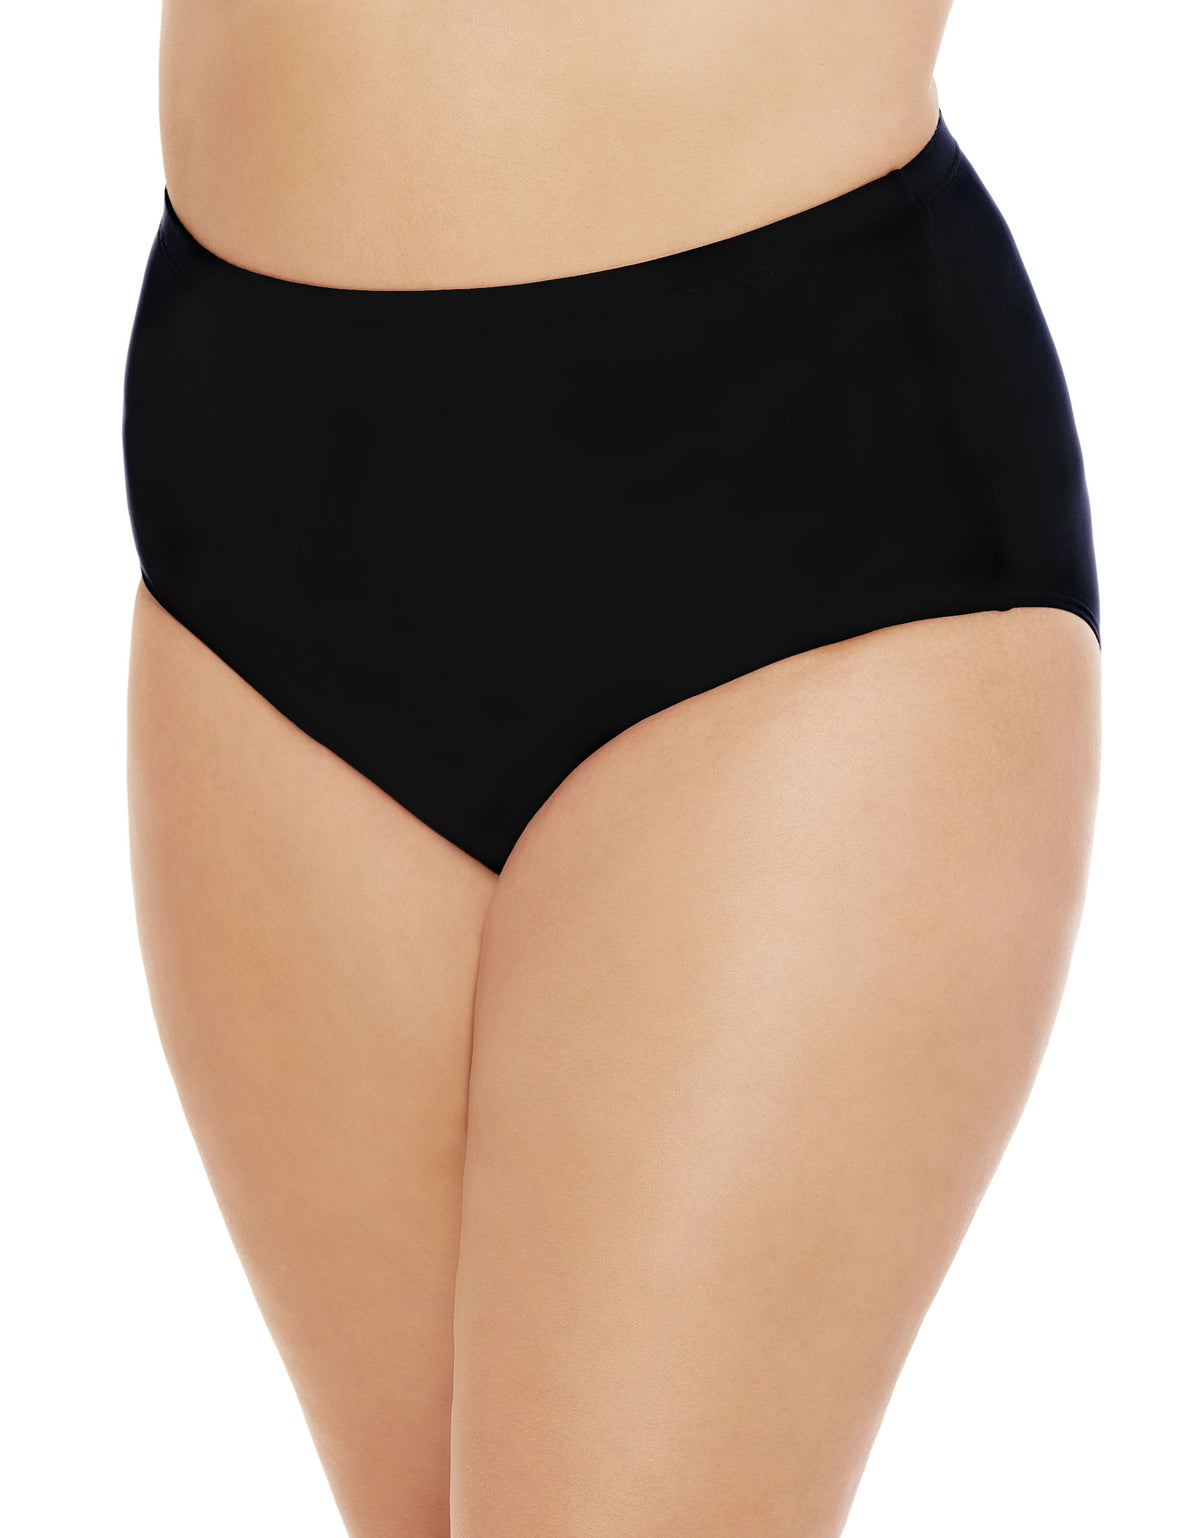 Christina Full Figure Swim Skirt with internal panty. Black or Navy –  Sunblockers